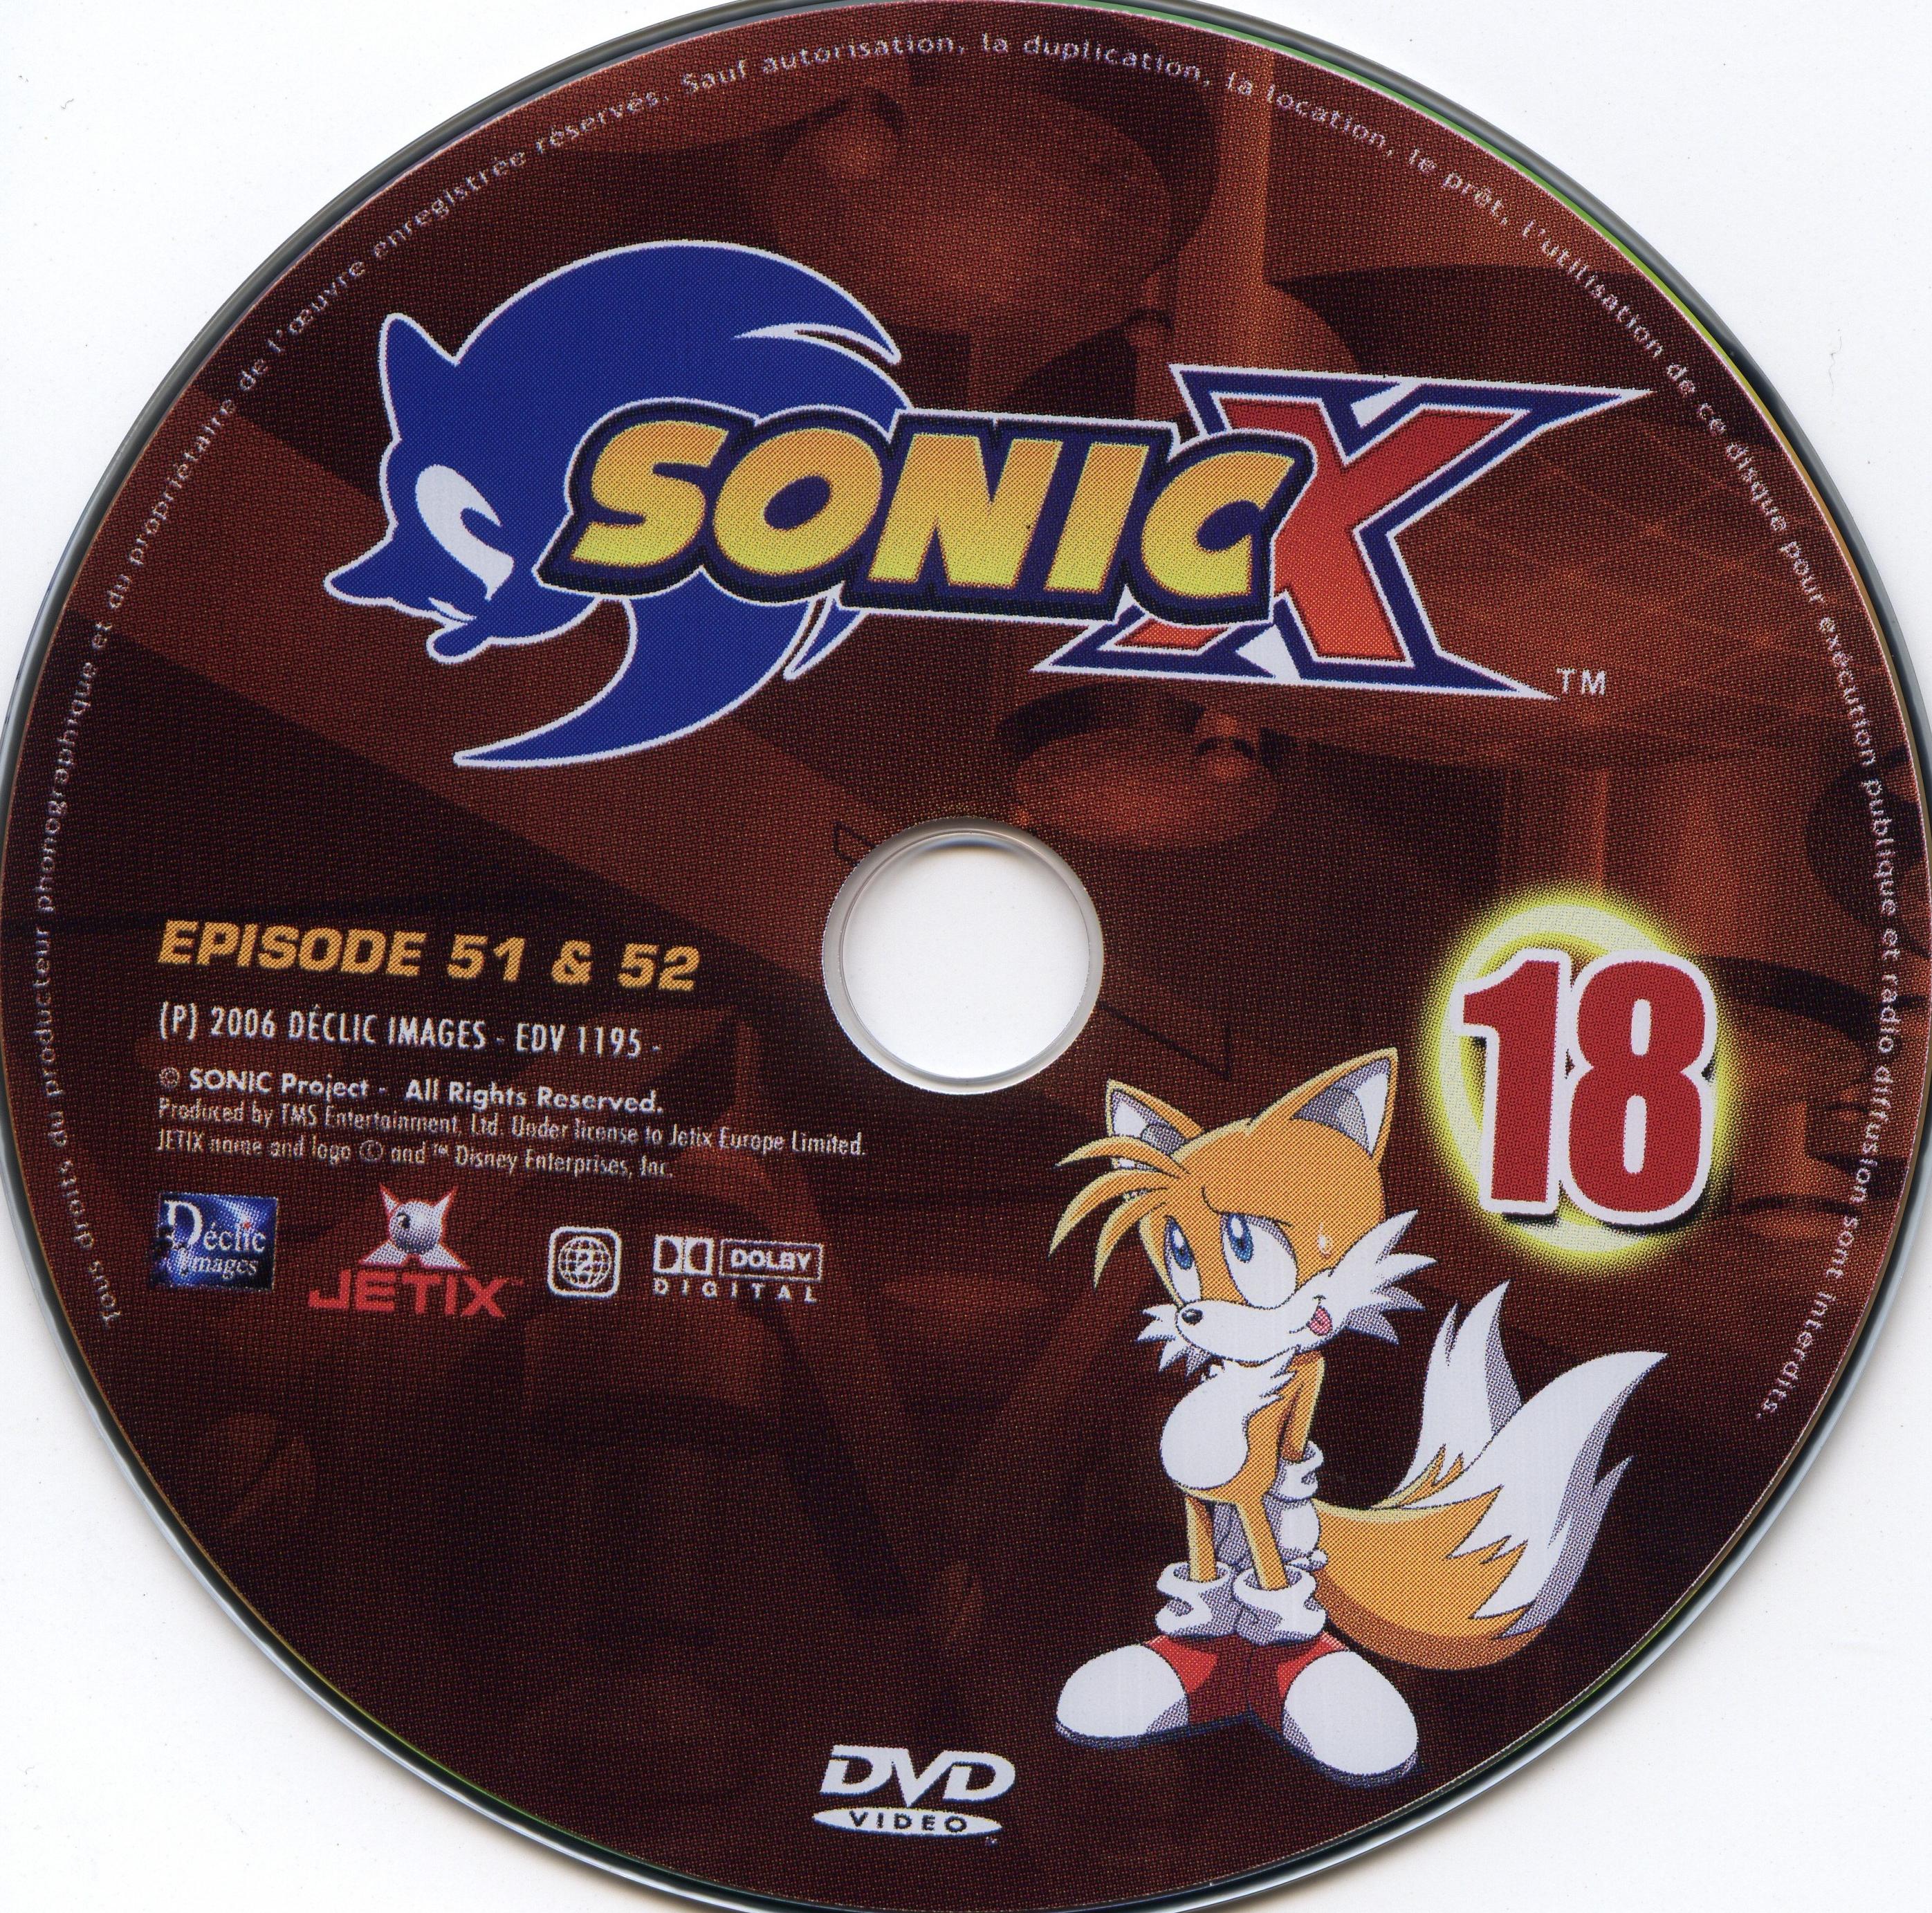 Sonic X vol 18